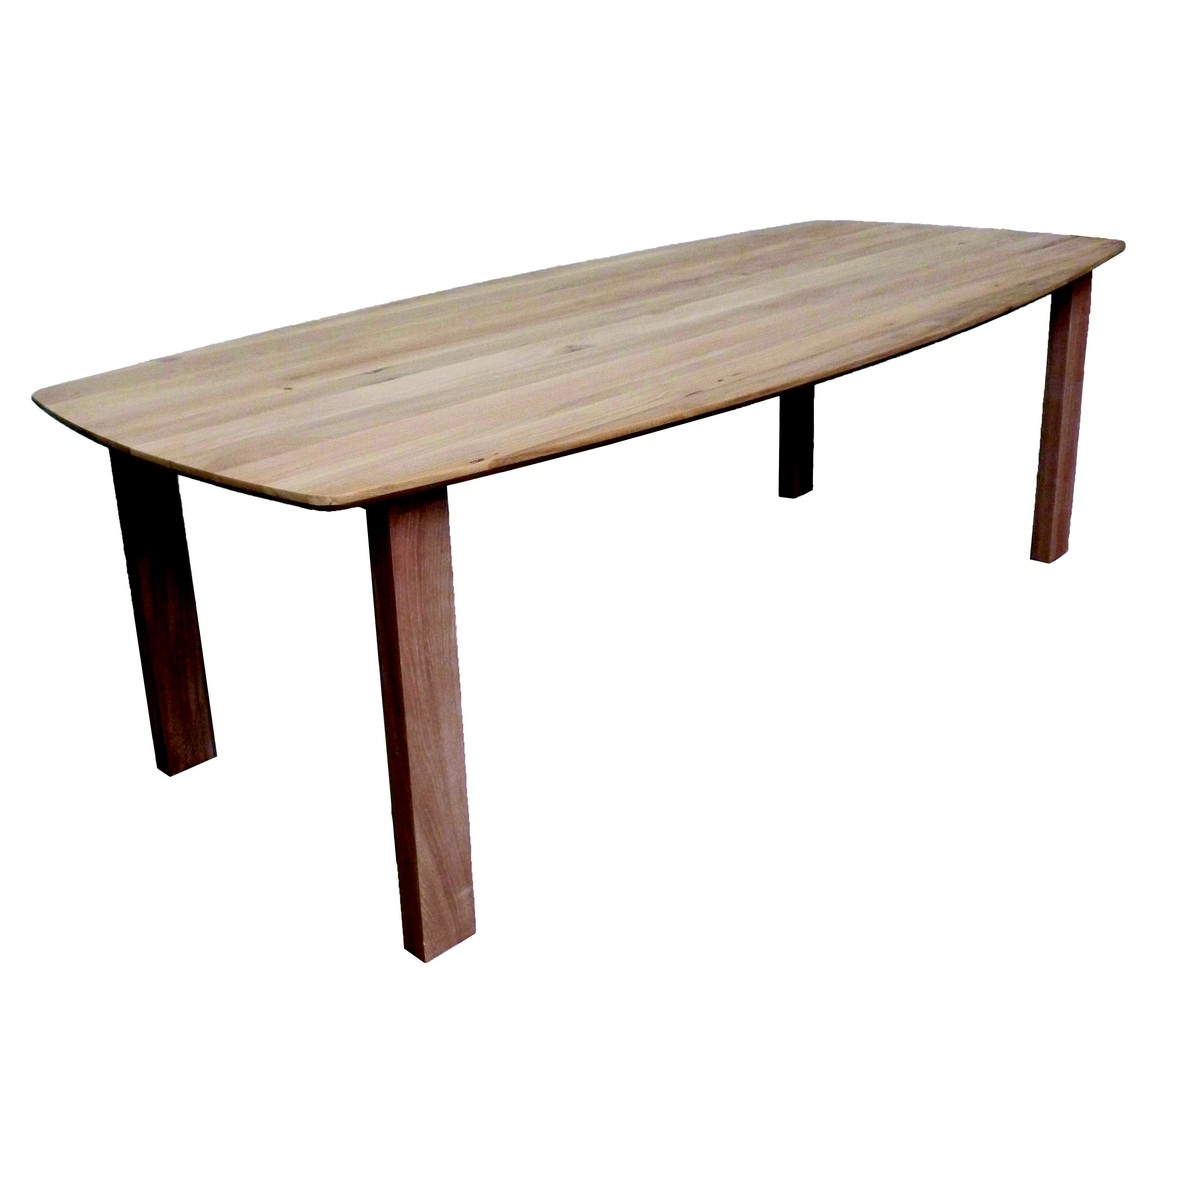   Table Selt Beveled ovale  220x110x77cm